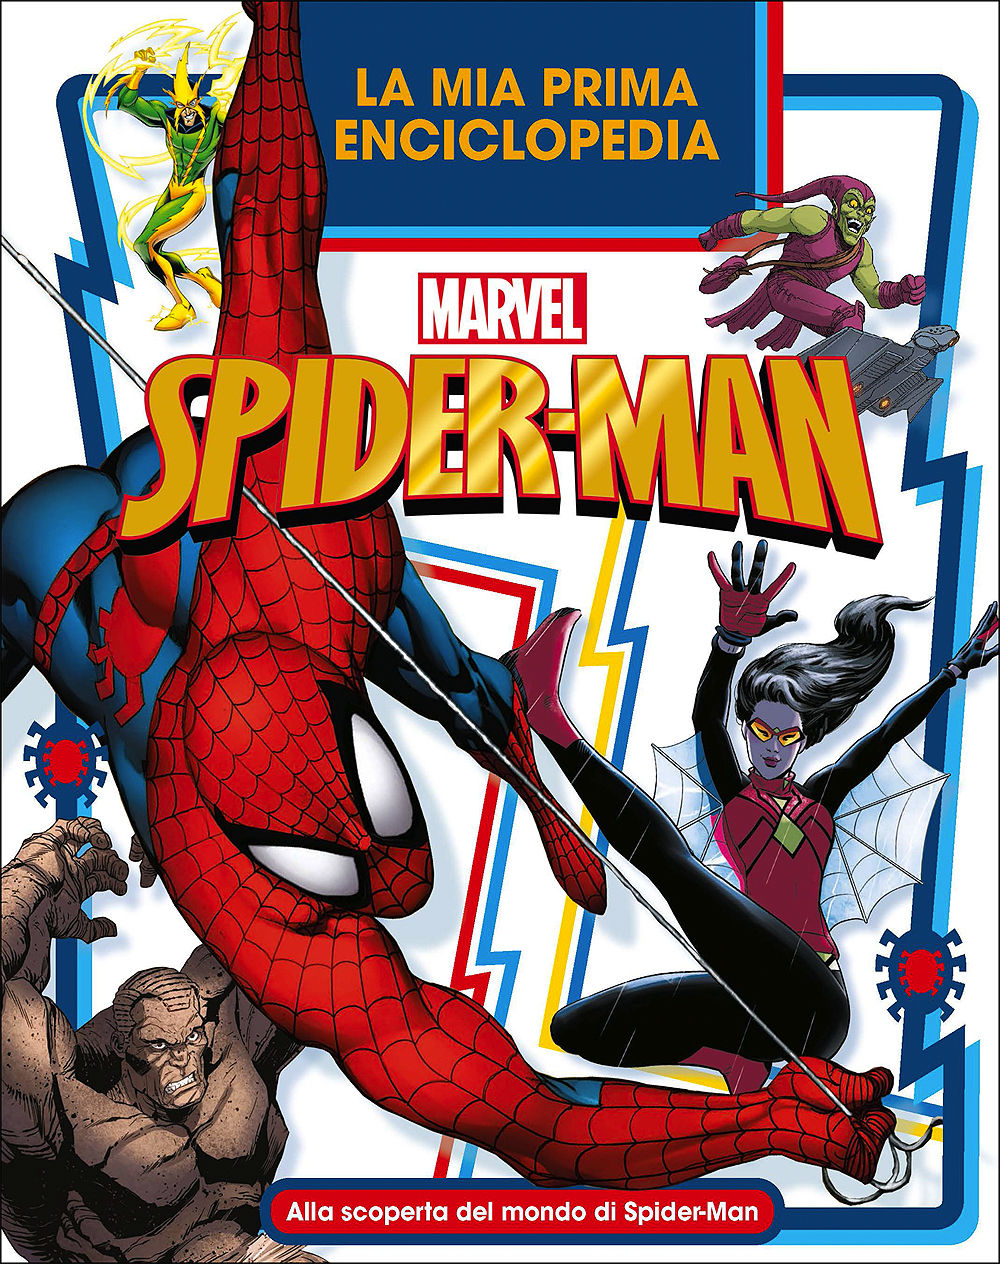 Enciclopedia dei Personaggi - La mia Prima Enciclopedia. Spider-Man